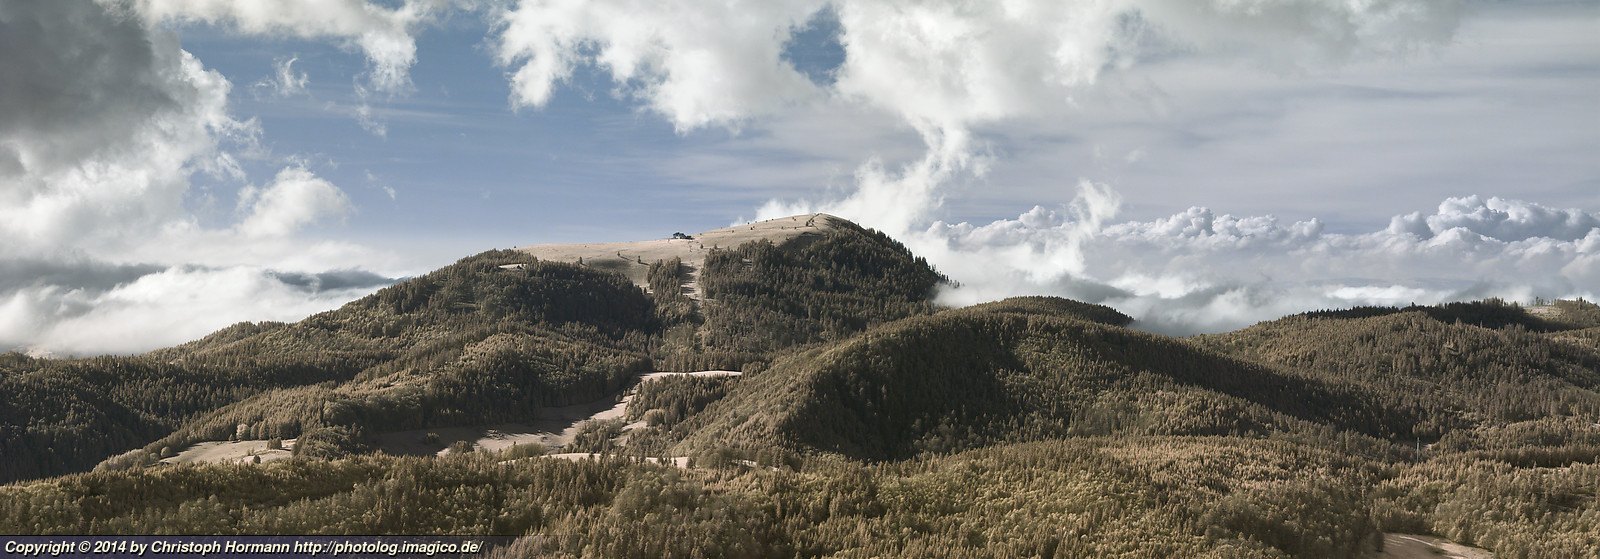 image 112: Belchen from Herzogenhorn in the southern Black Forest, infrared